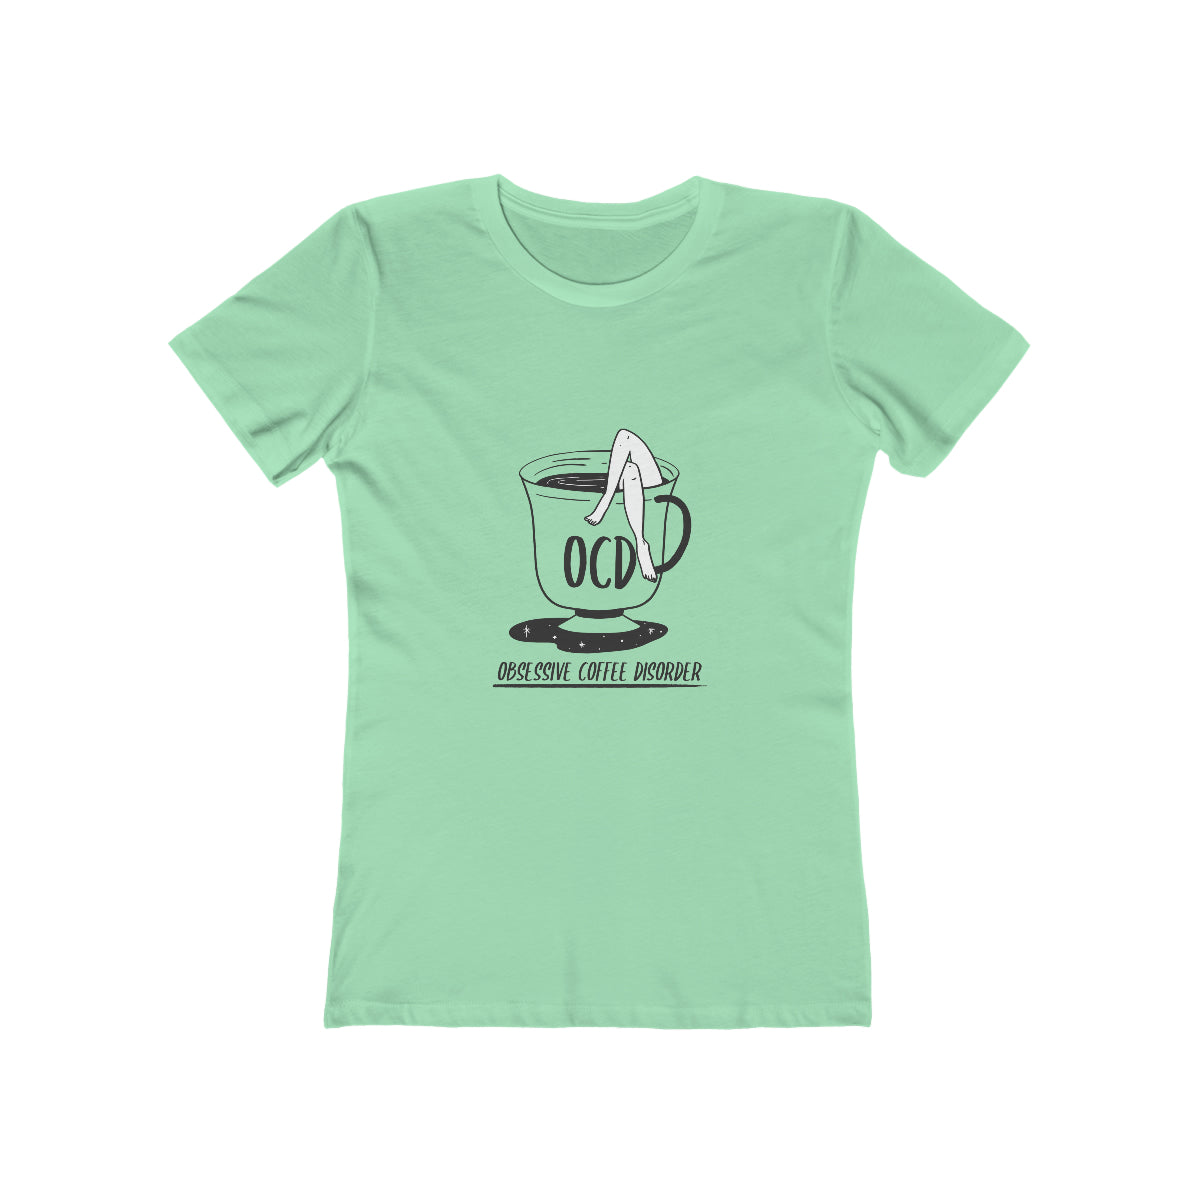 Obsessive Coffee Disorder - Women's T-shirt